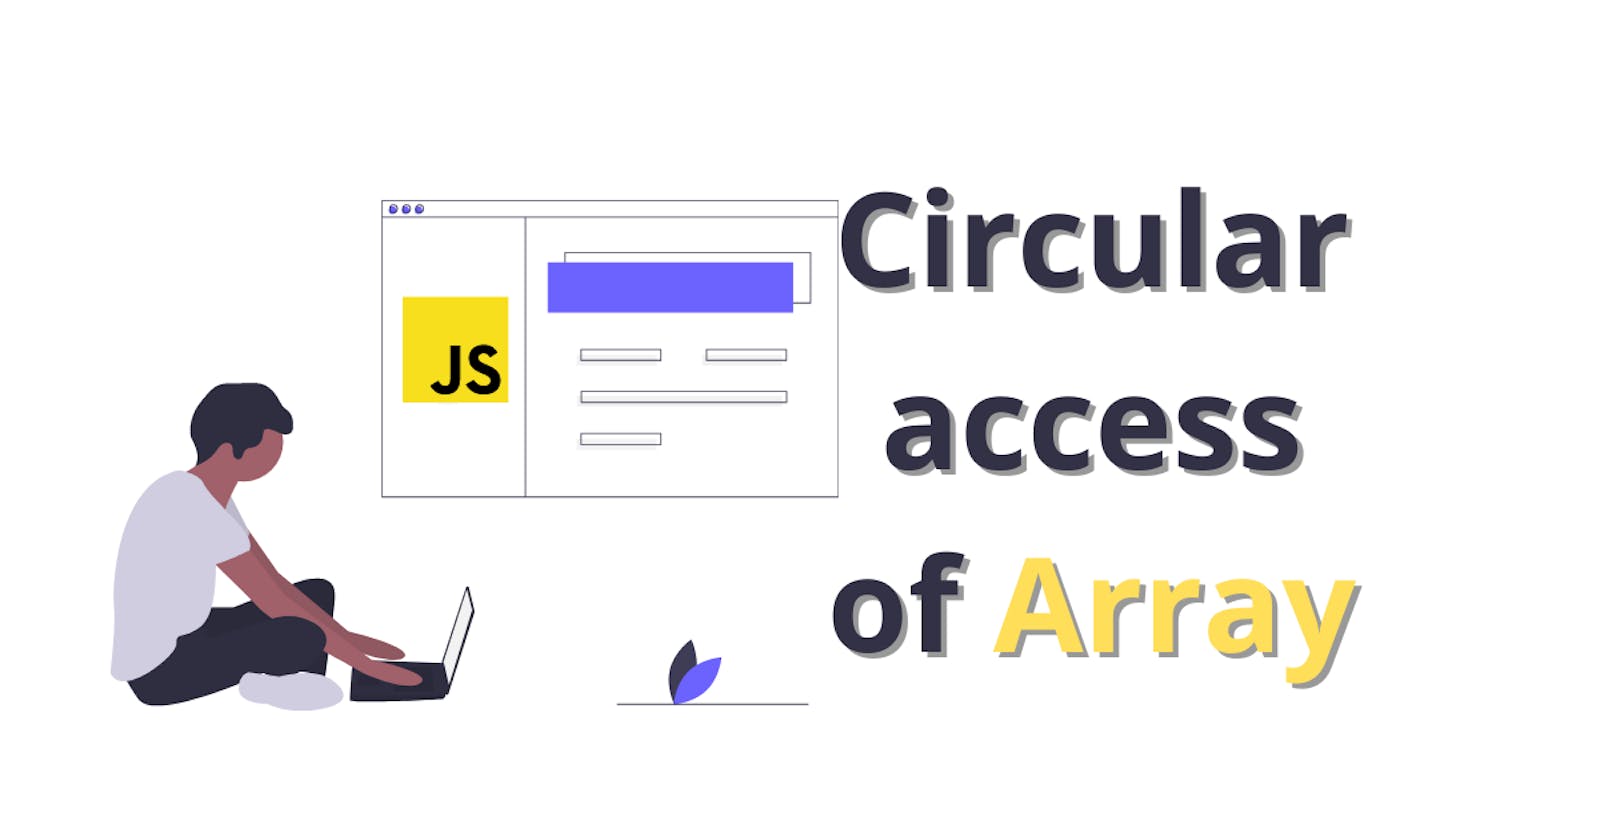 Circular access of Array in JavaScript